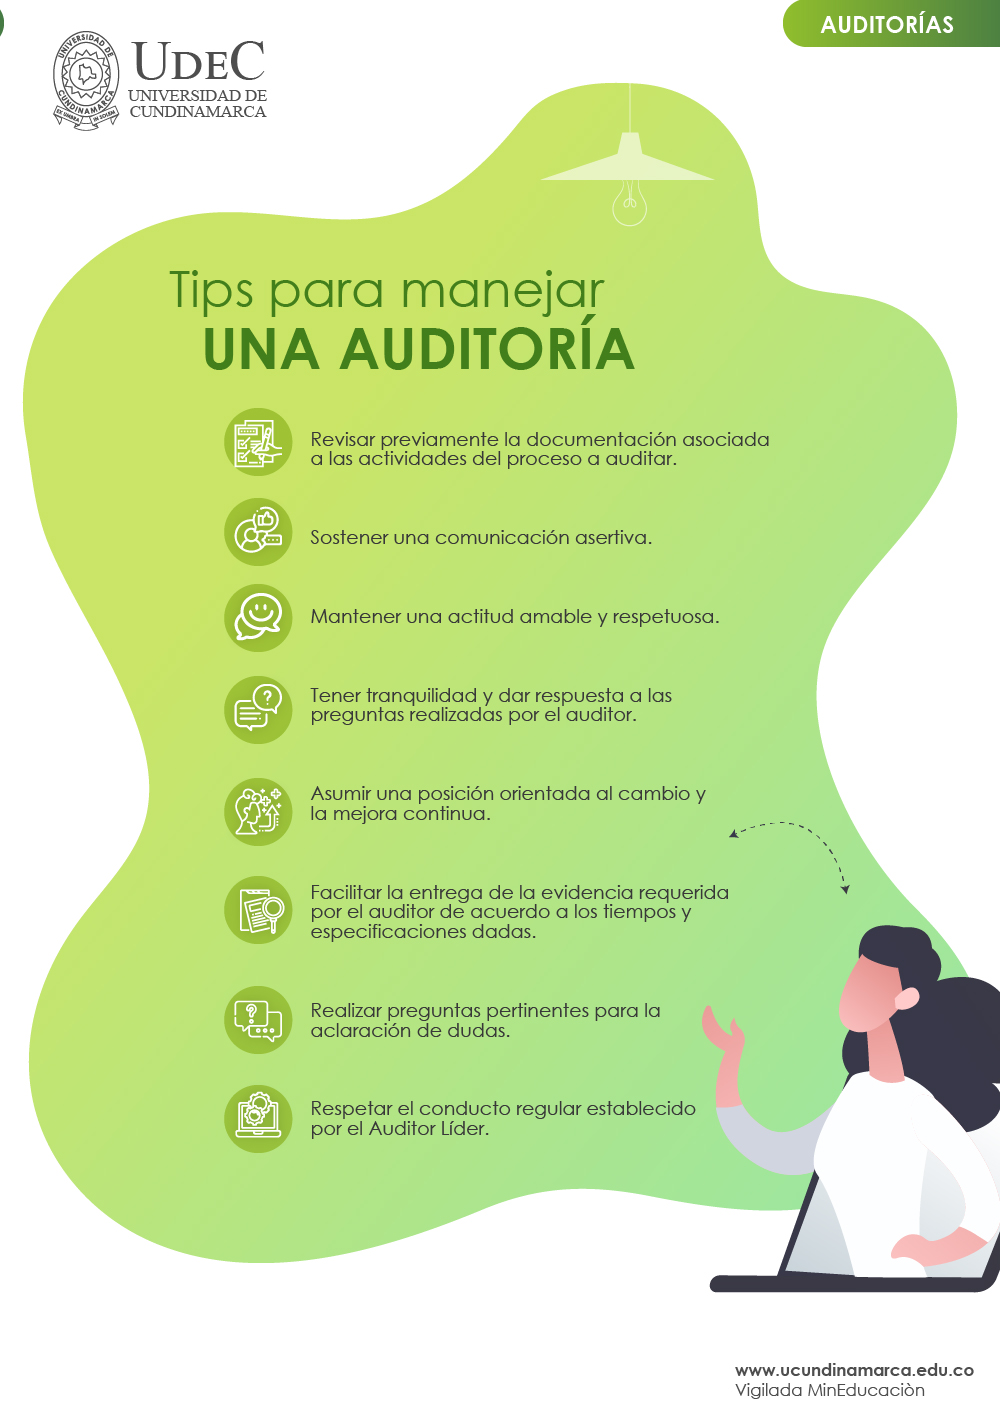 Tips para manejar una auditoria